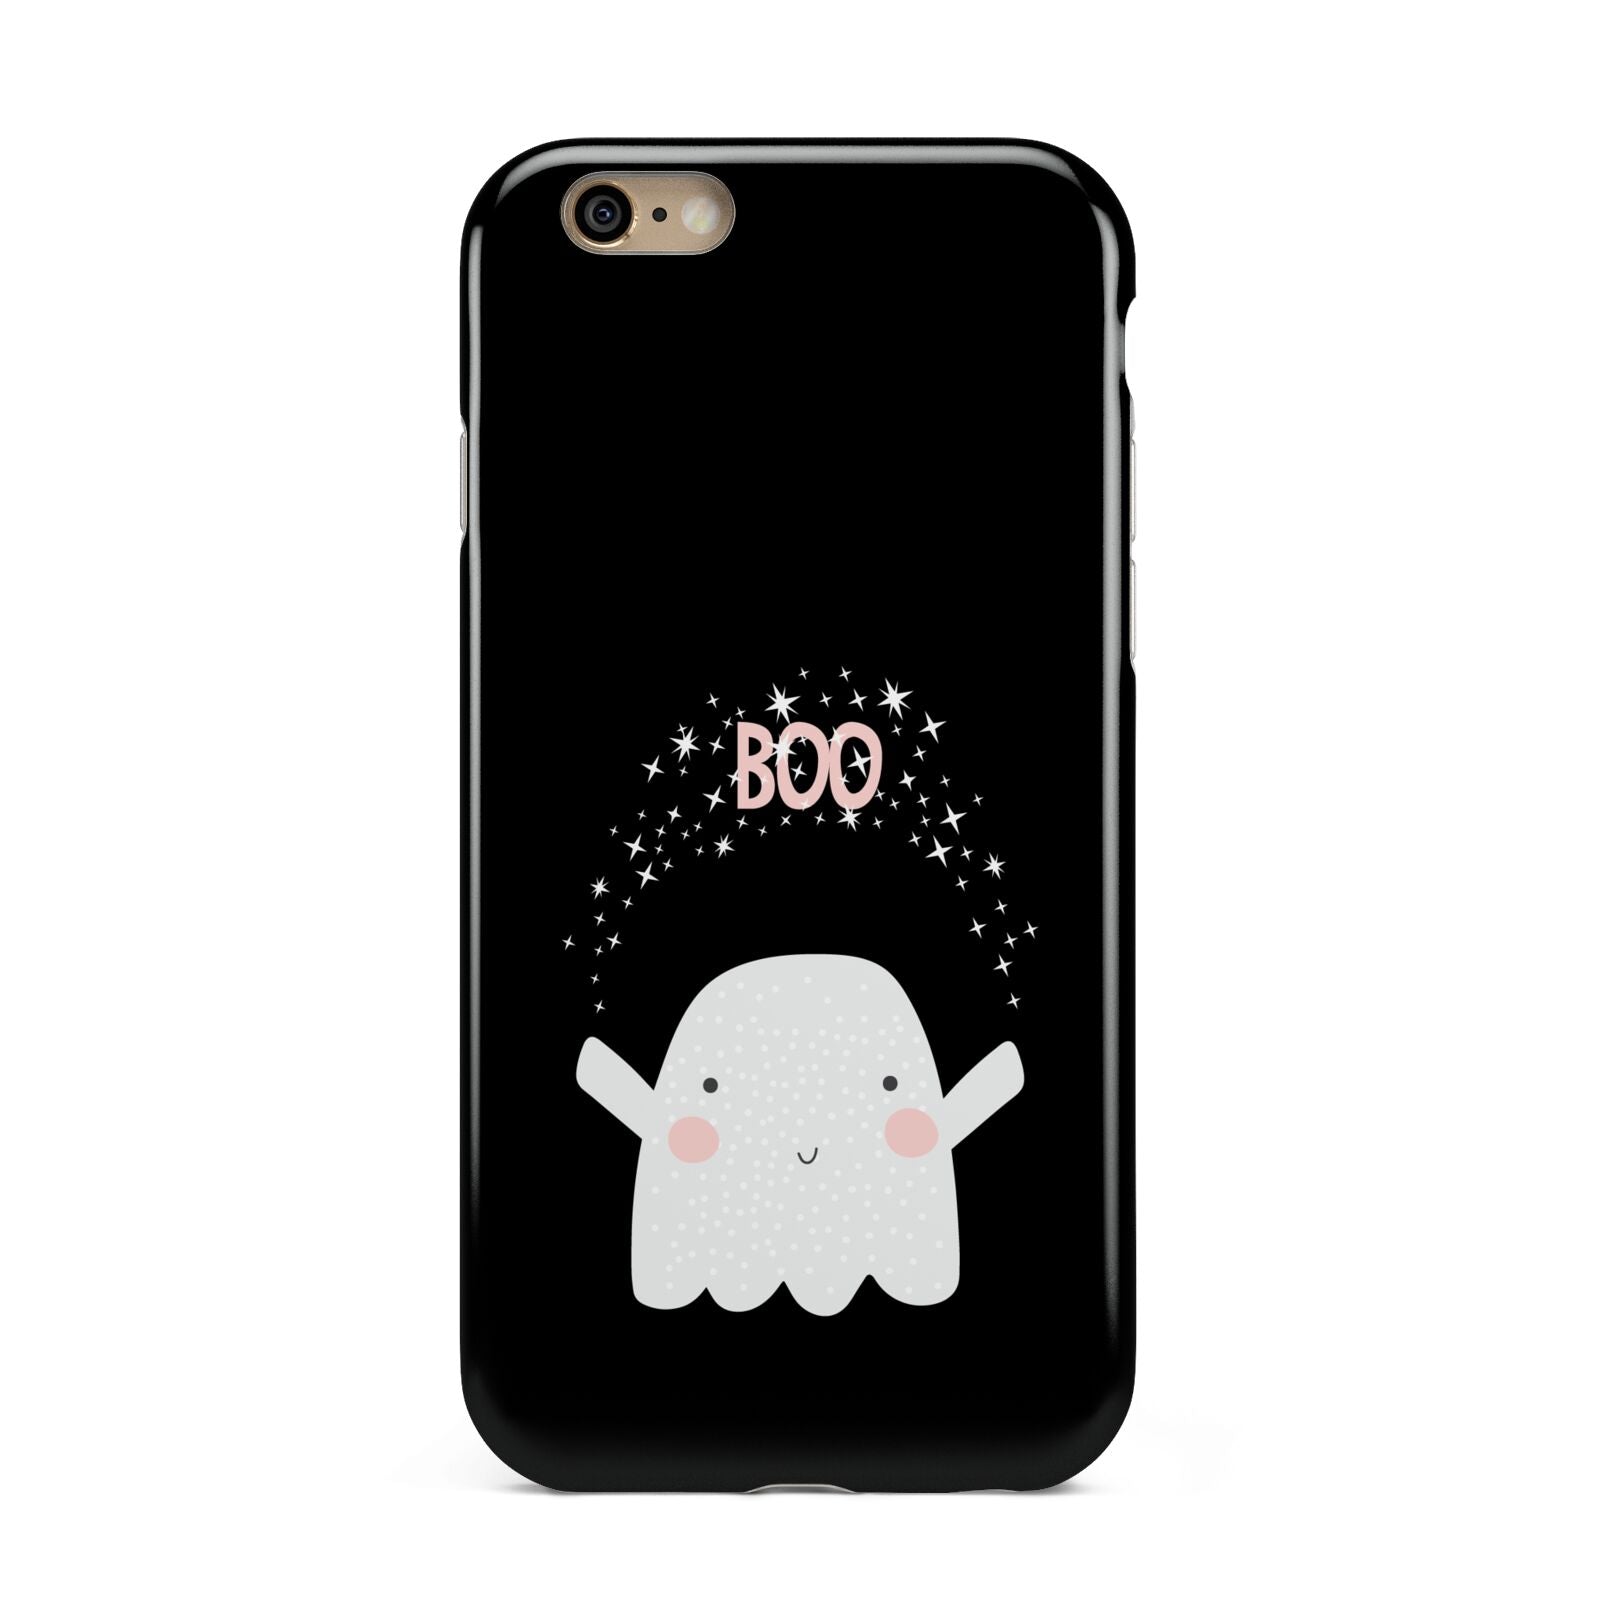 Magical Ghost Apple iPhone 6 3D Tough Case